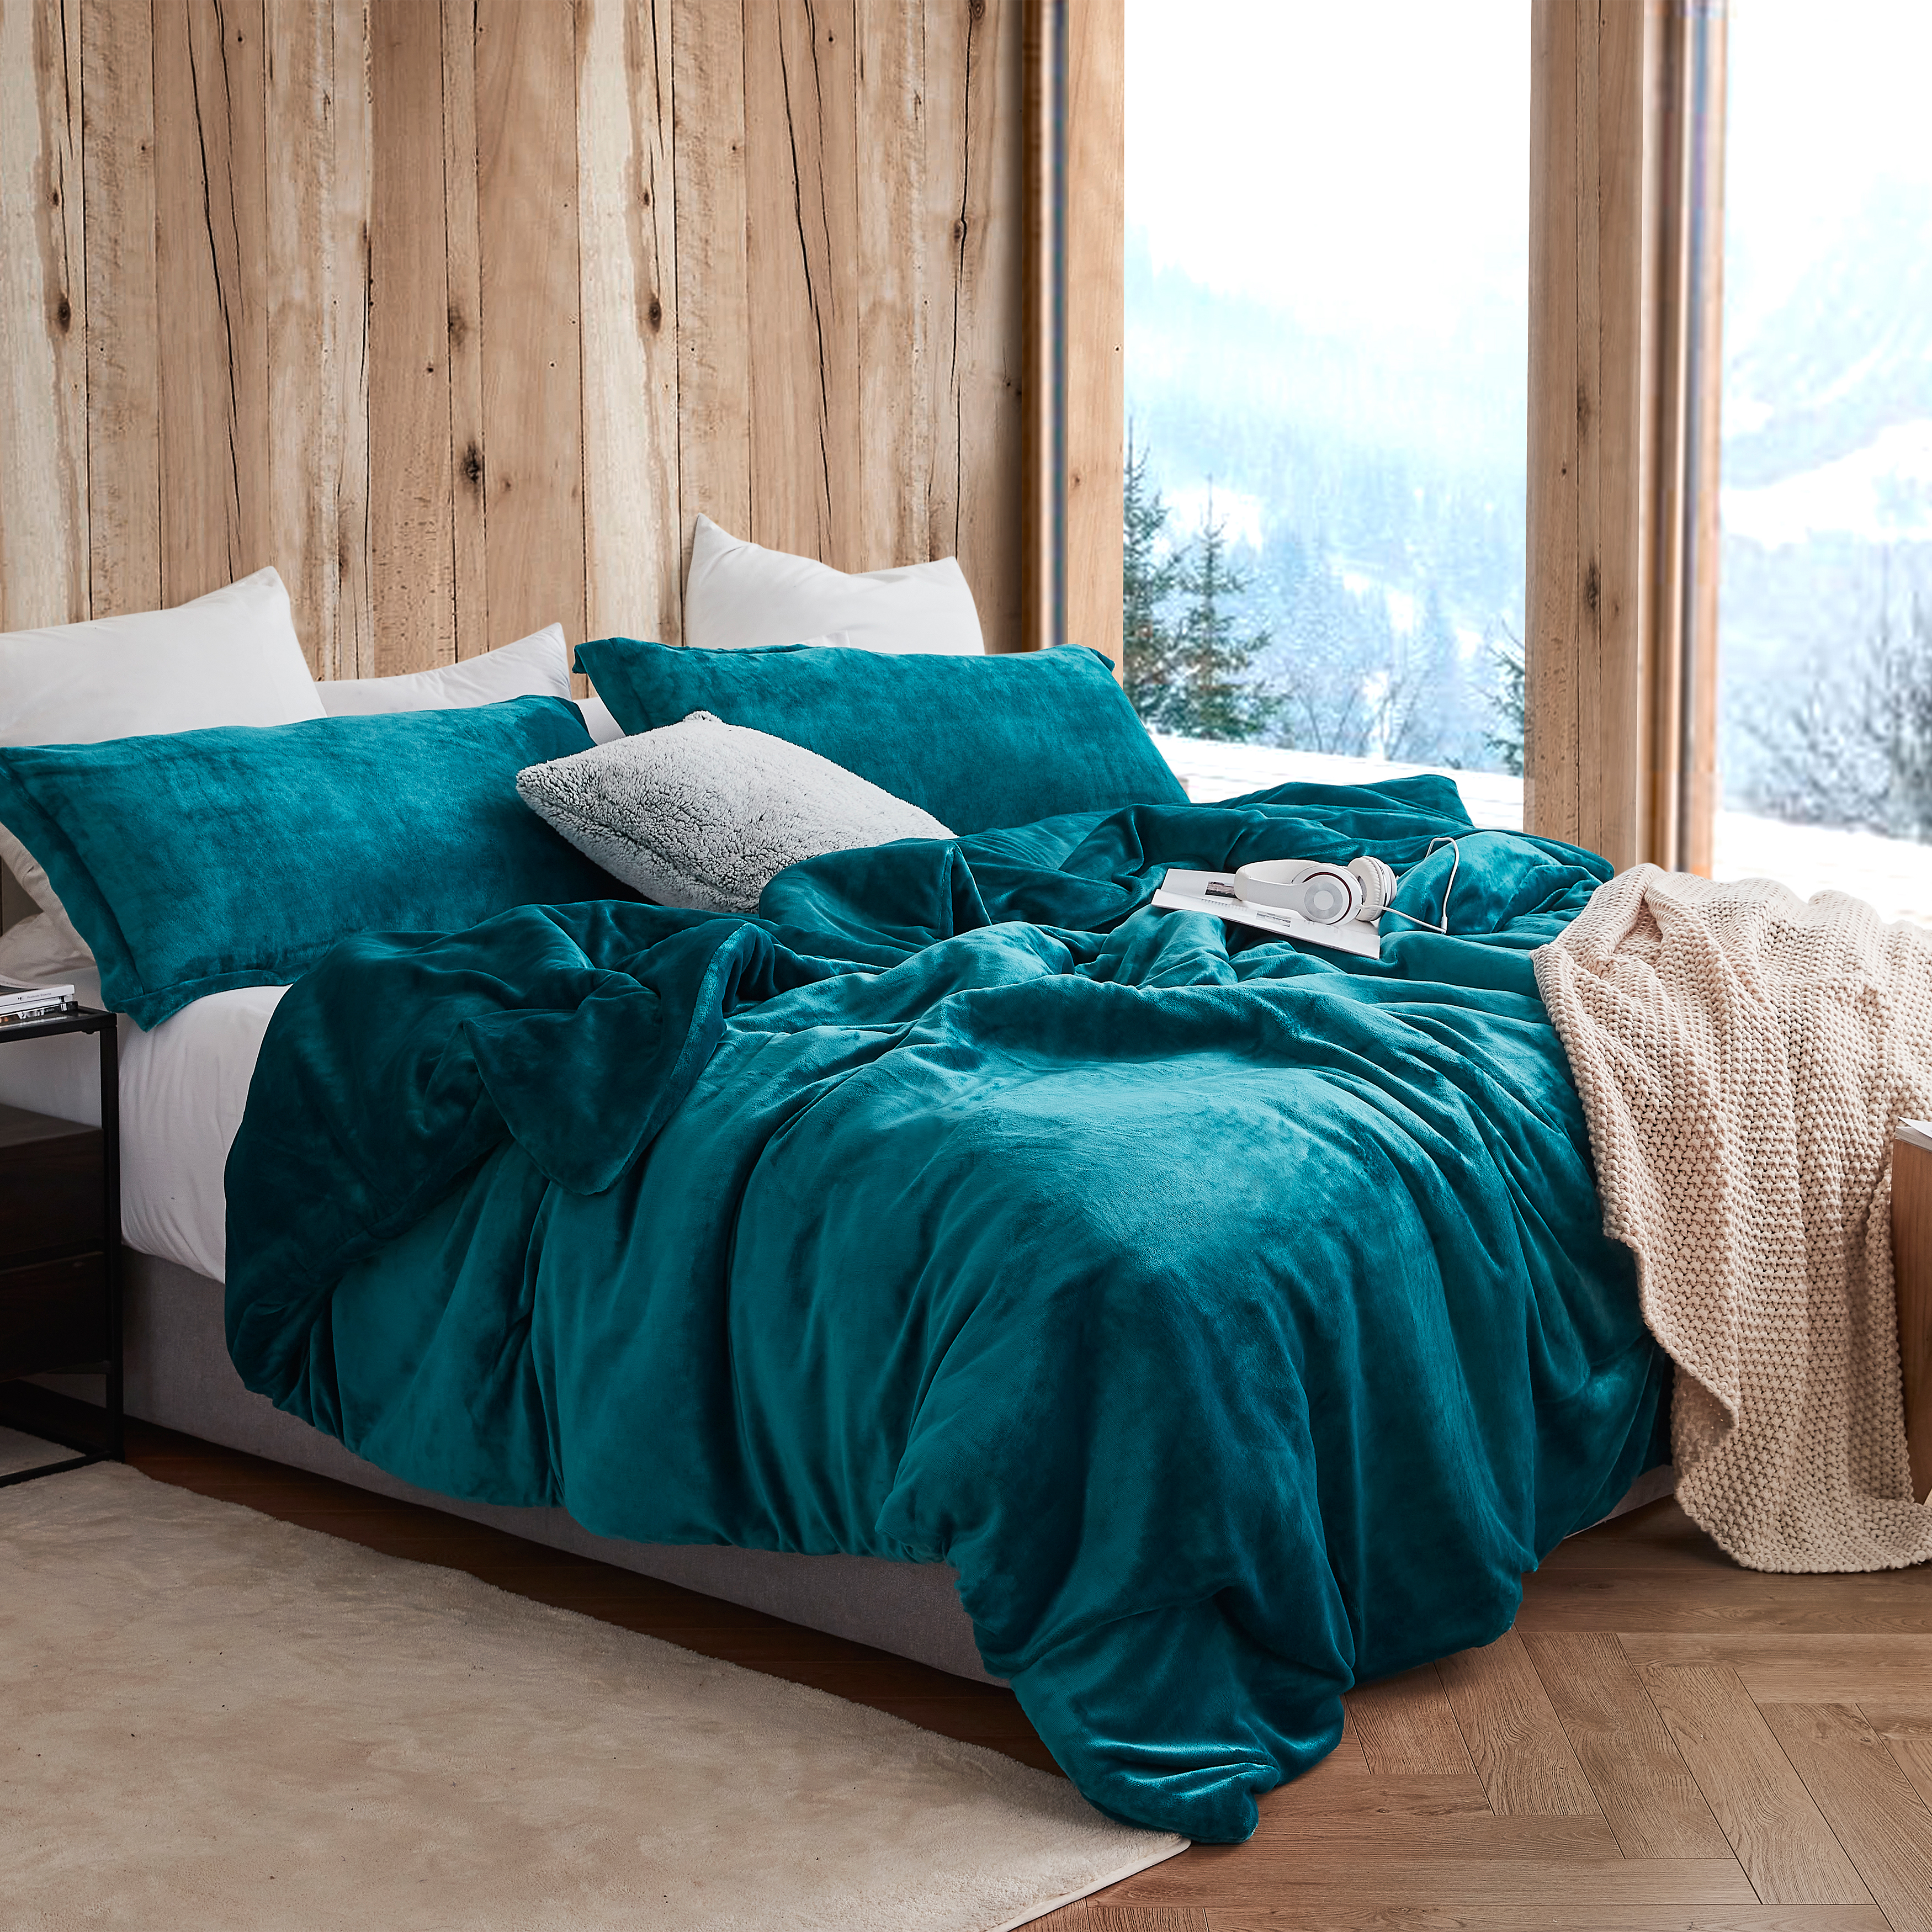 Coma Inducer Oversized King Comforter - The Original Plush - Deep Lagoon Blue